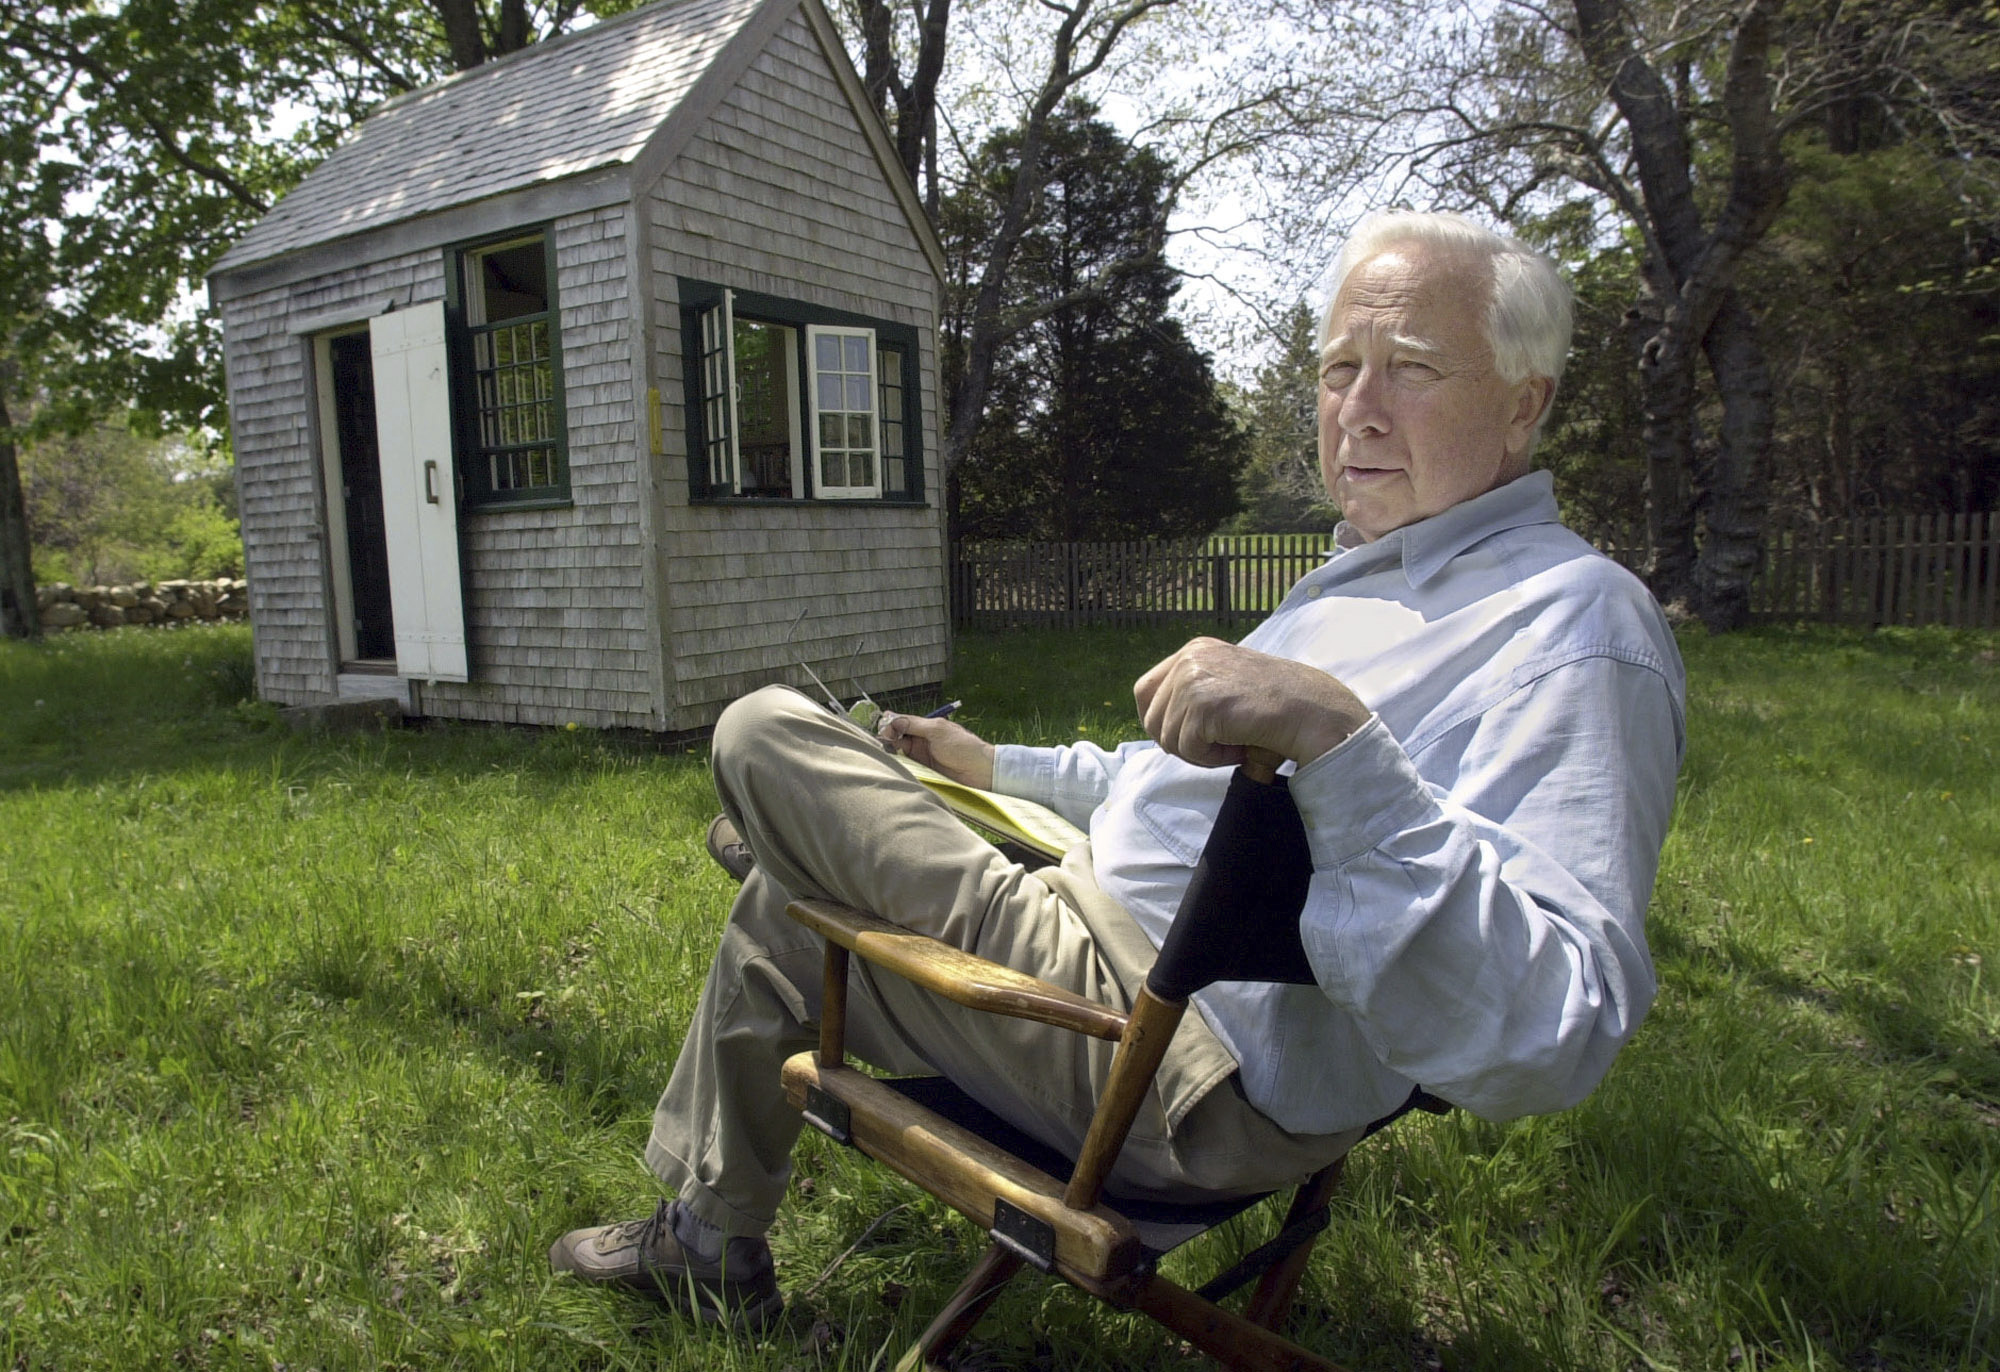 David McCullough, Pulitzer-Winning Historian, Dies at 89